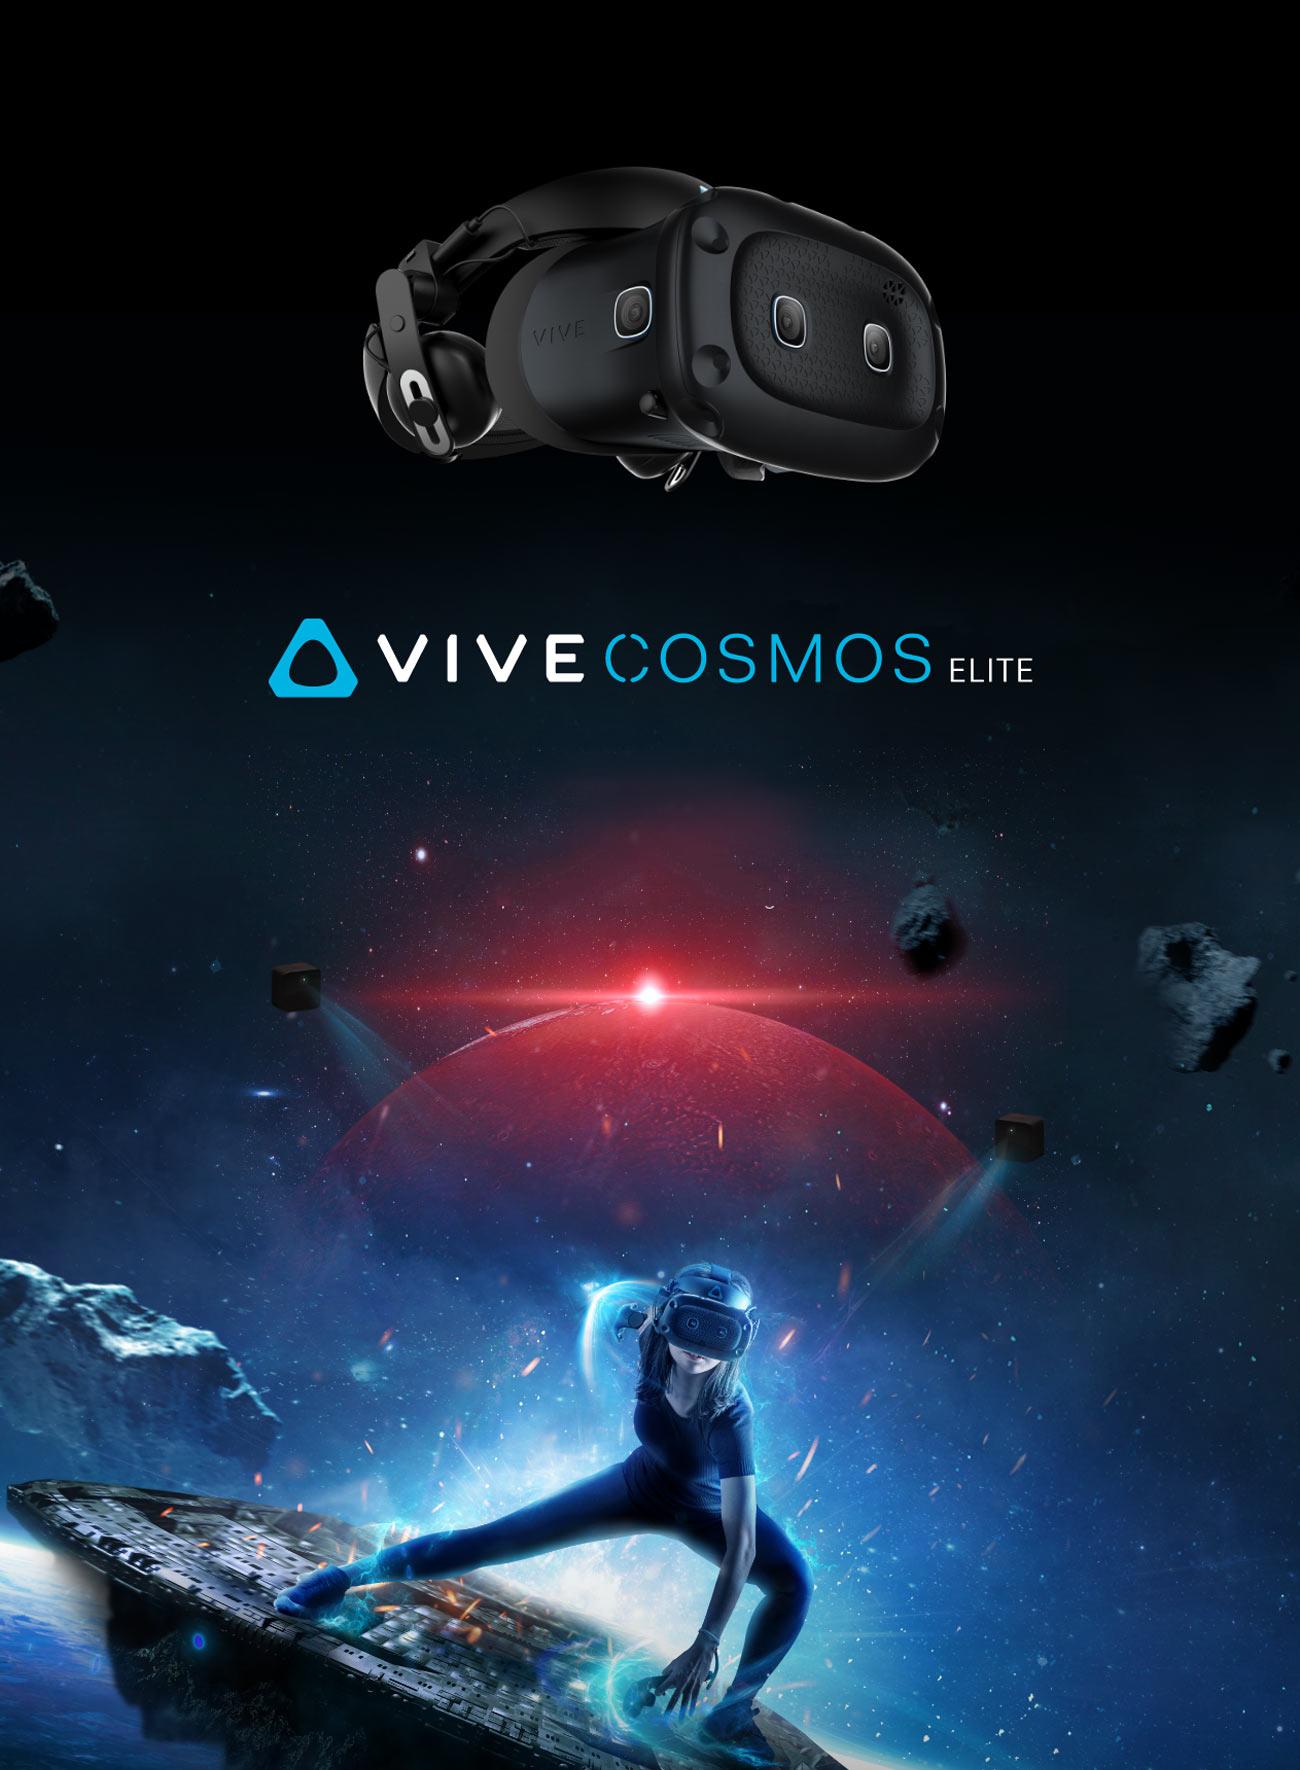 HTC VIVE Cosmos Elite VR Headset facing forward